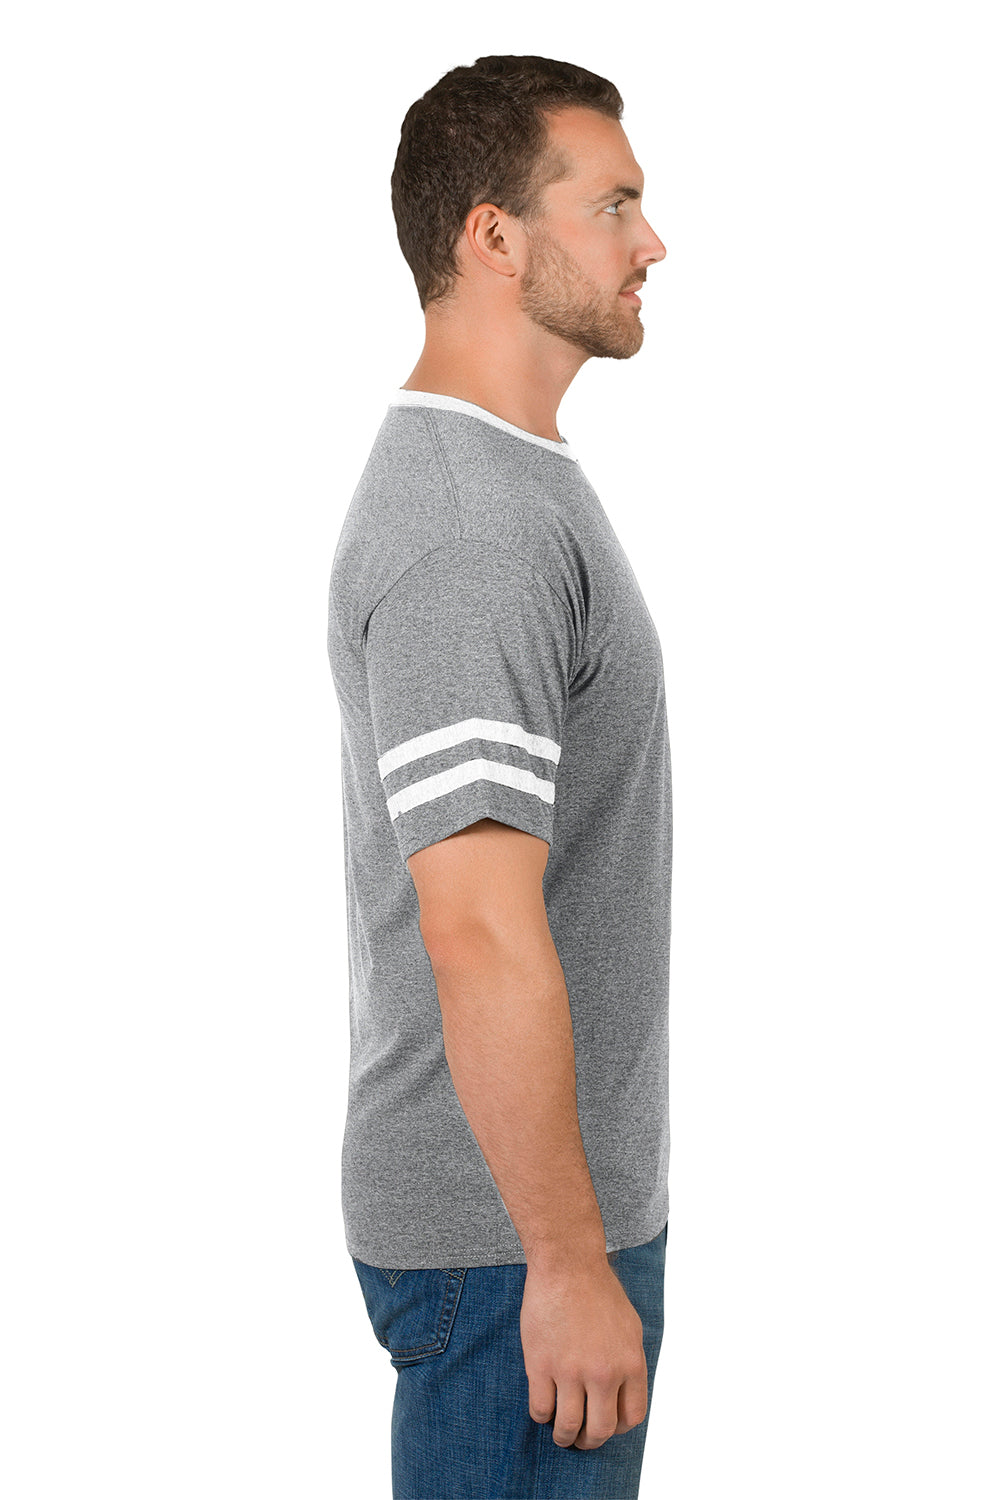 Jerzees 602MR Mens Varsity Ringer Short Sleeve Crewneck T-Shirt Heather Oxford Grey/White Side